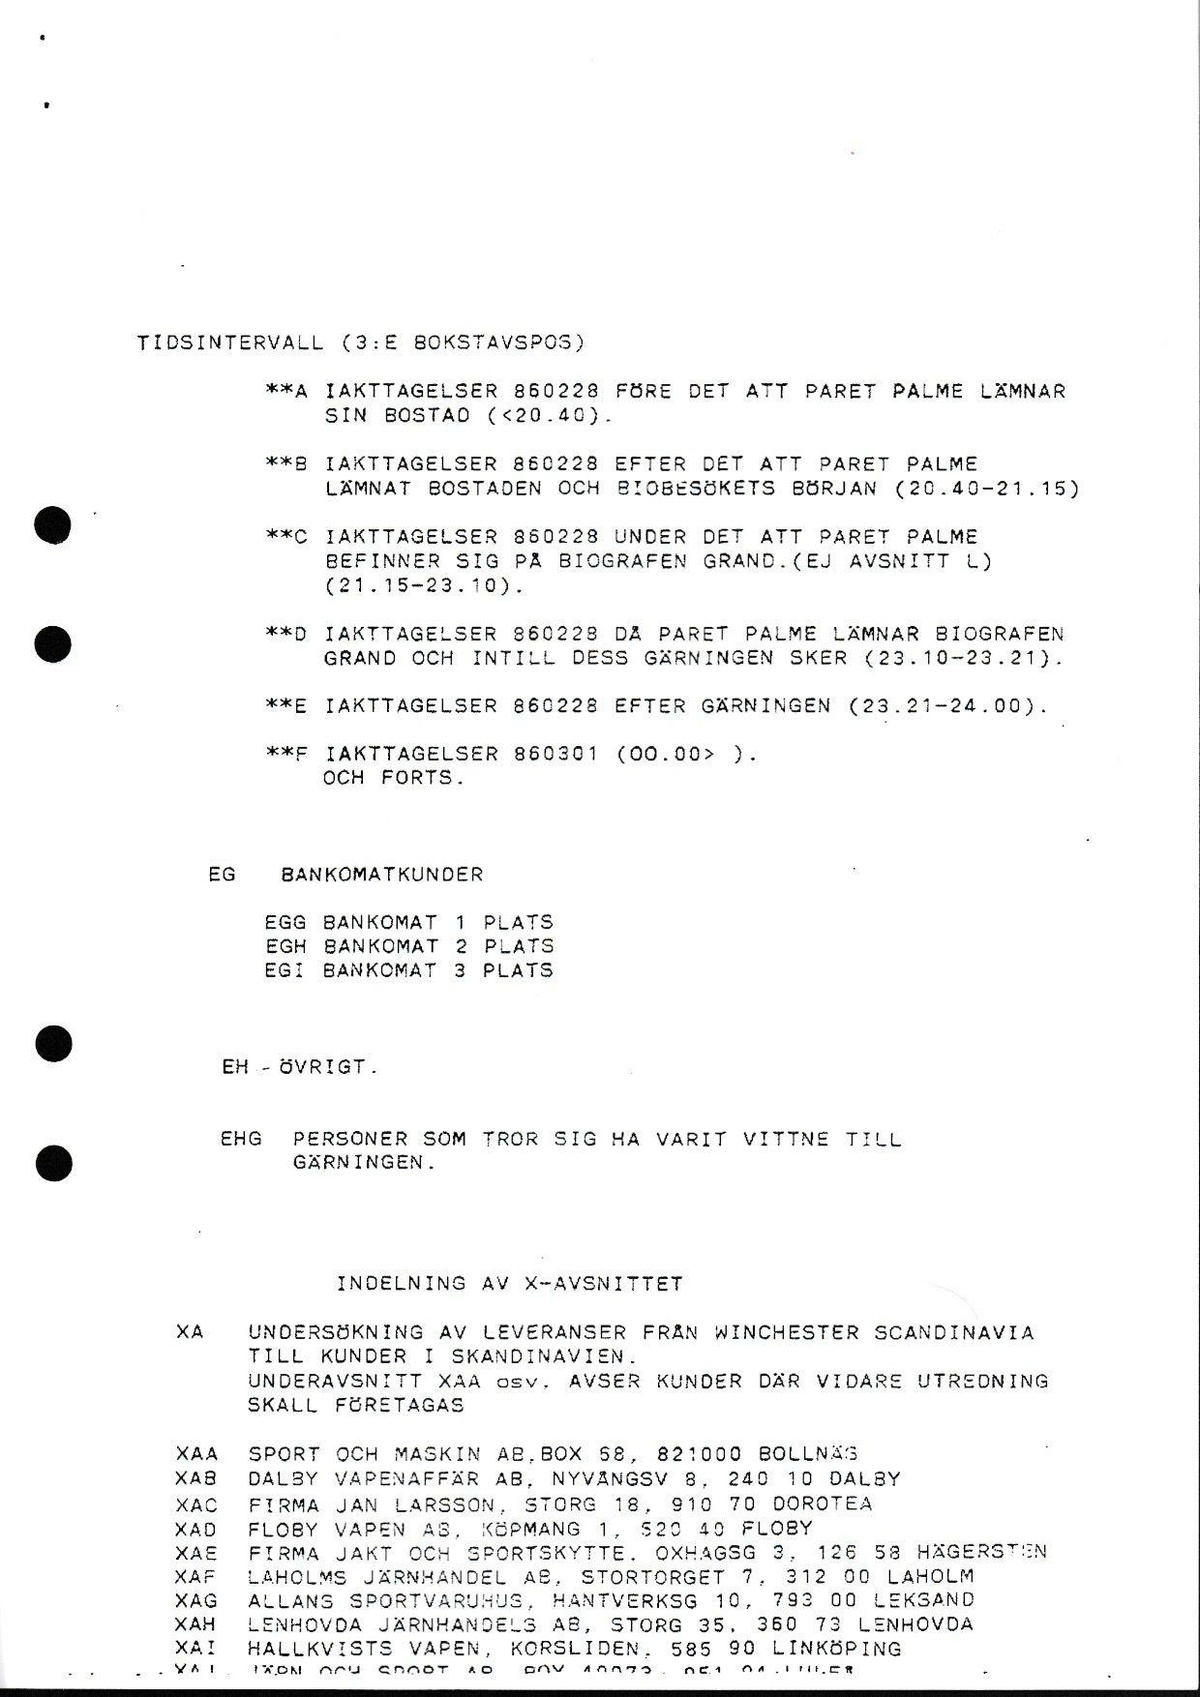 Pol-1993-04-14 A881-00-A Avsnittsindelning.pdf